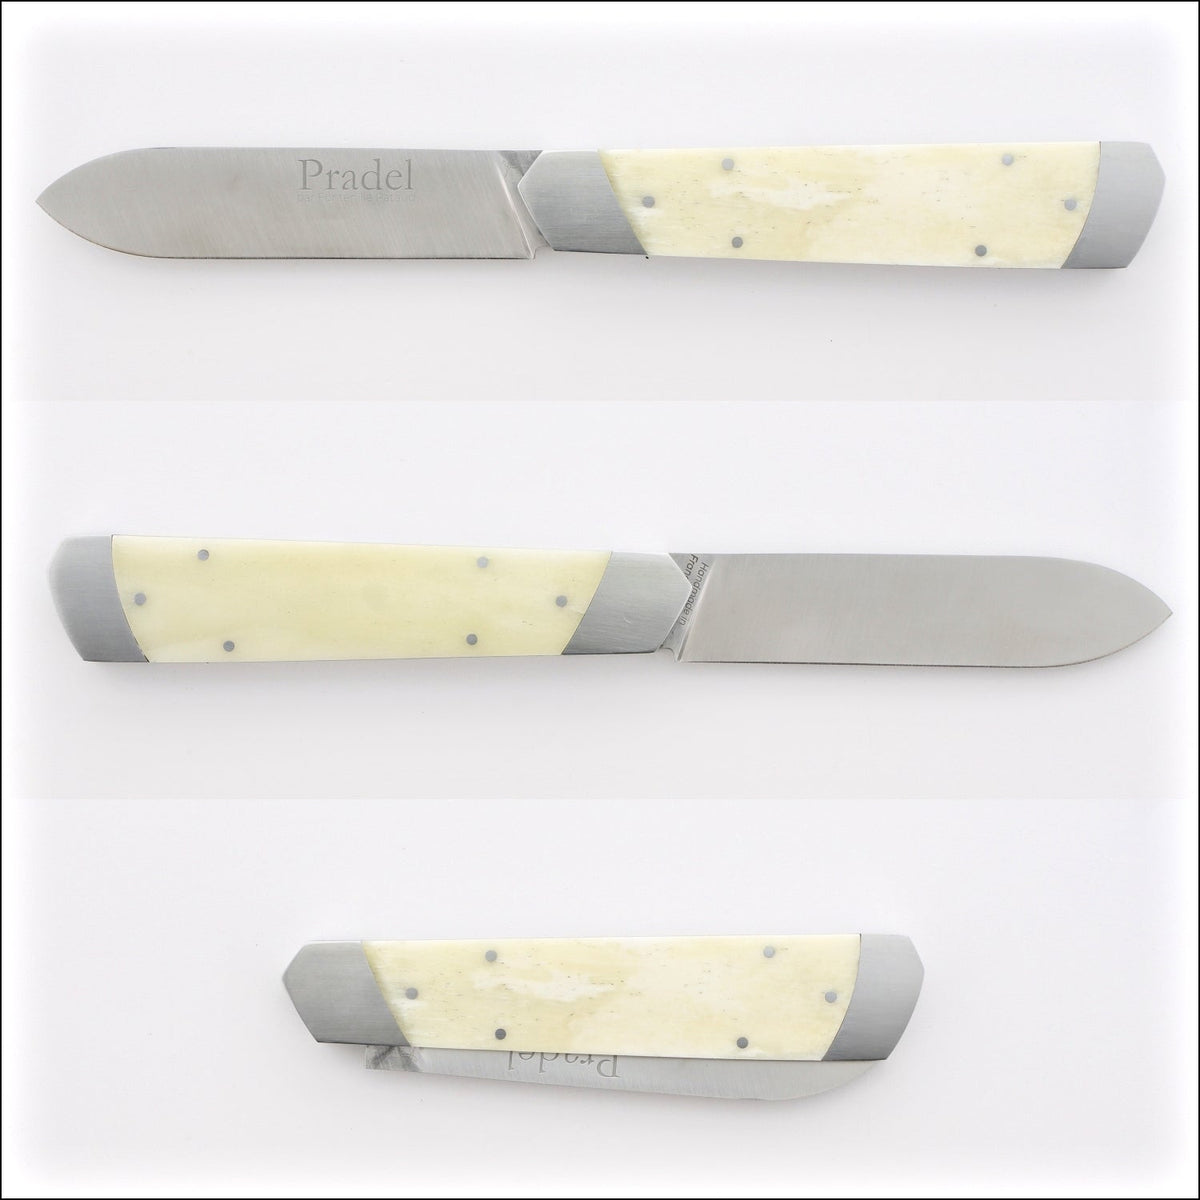 Pradel Folding Knife Cattle Bone Handle &amp; Lock-Back by Fontenille Pataud